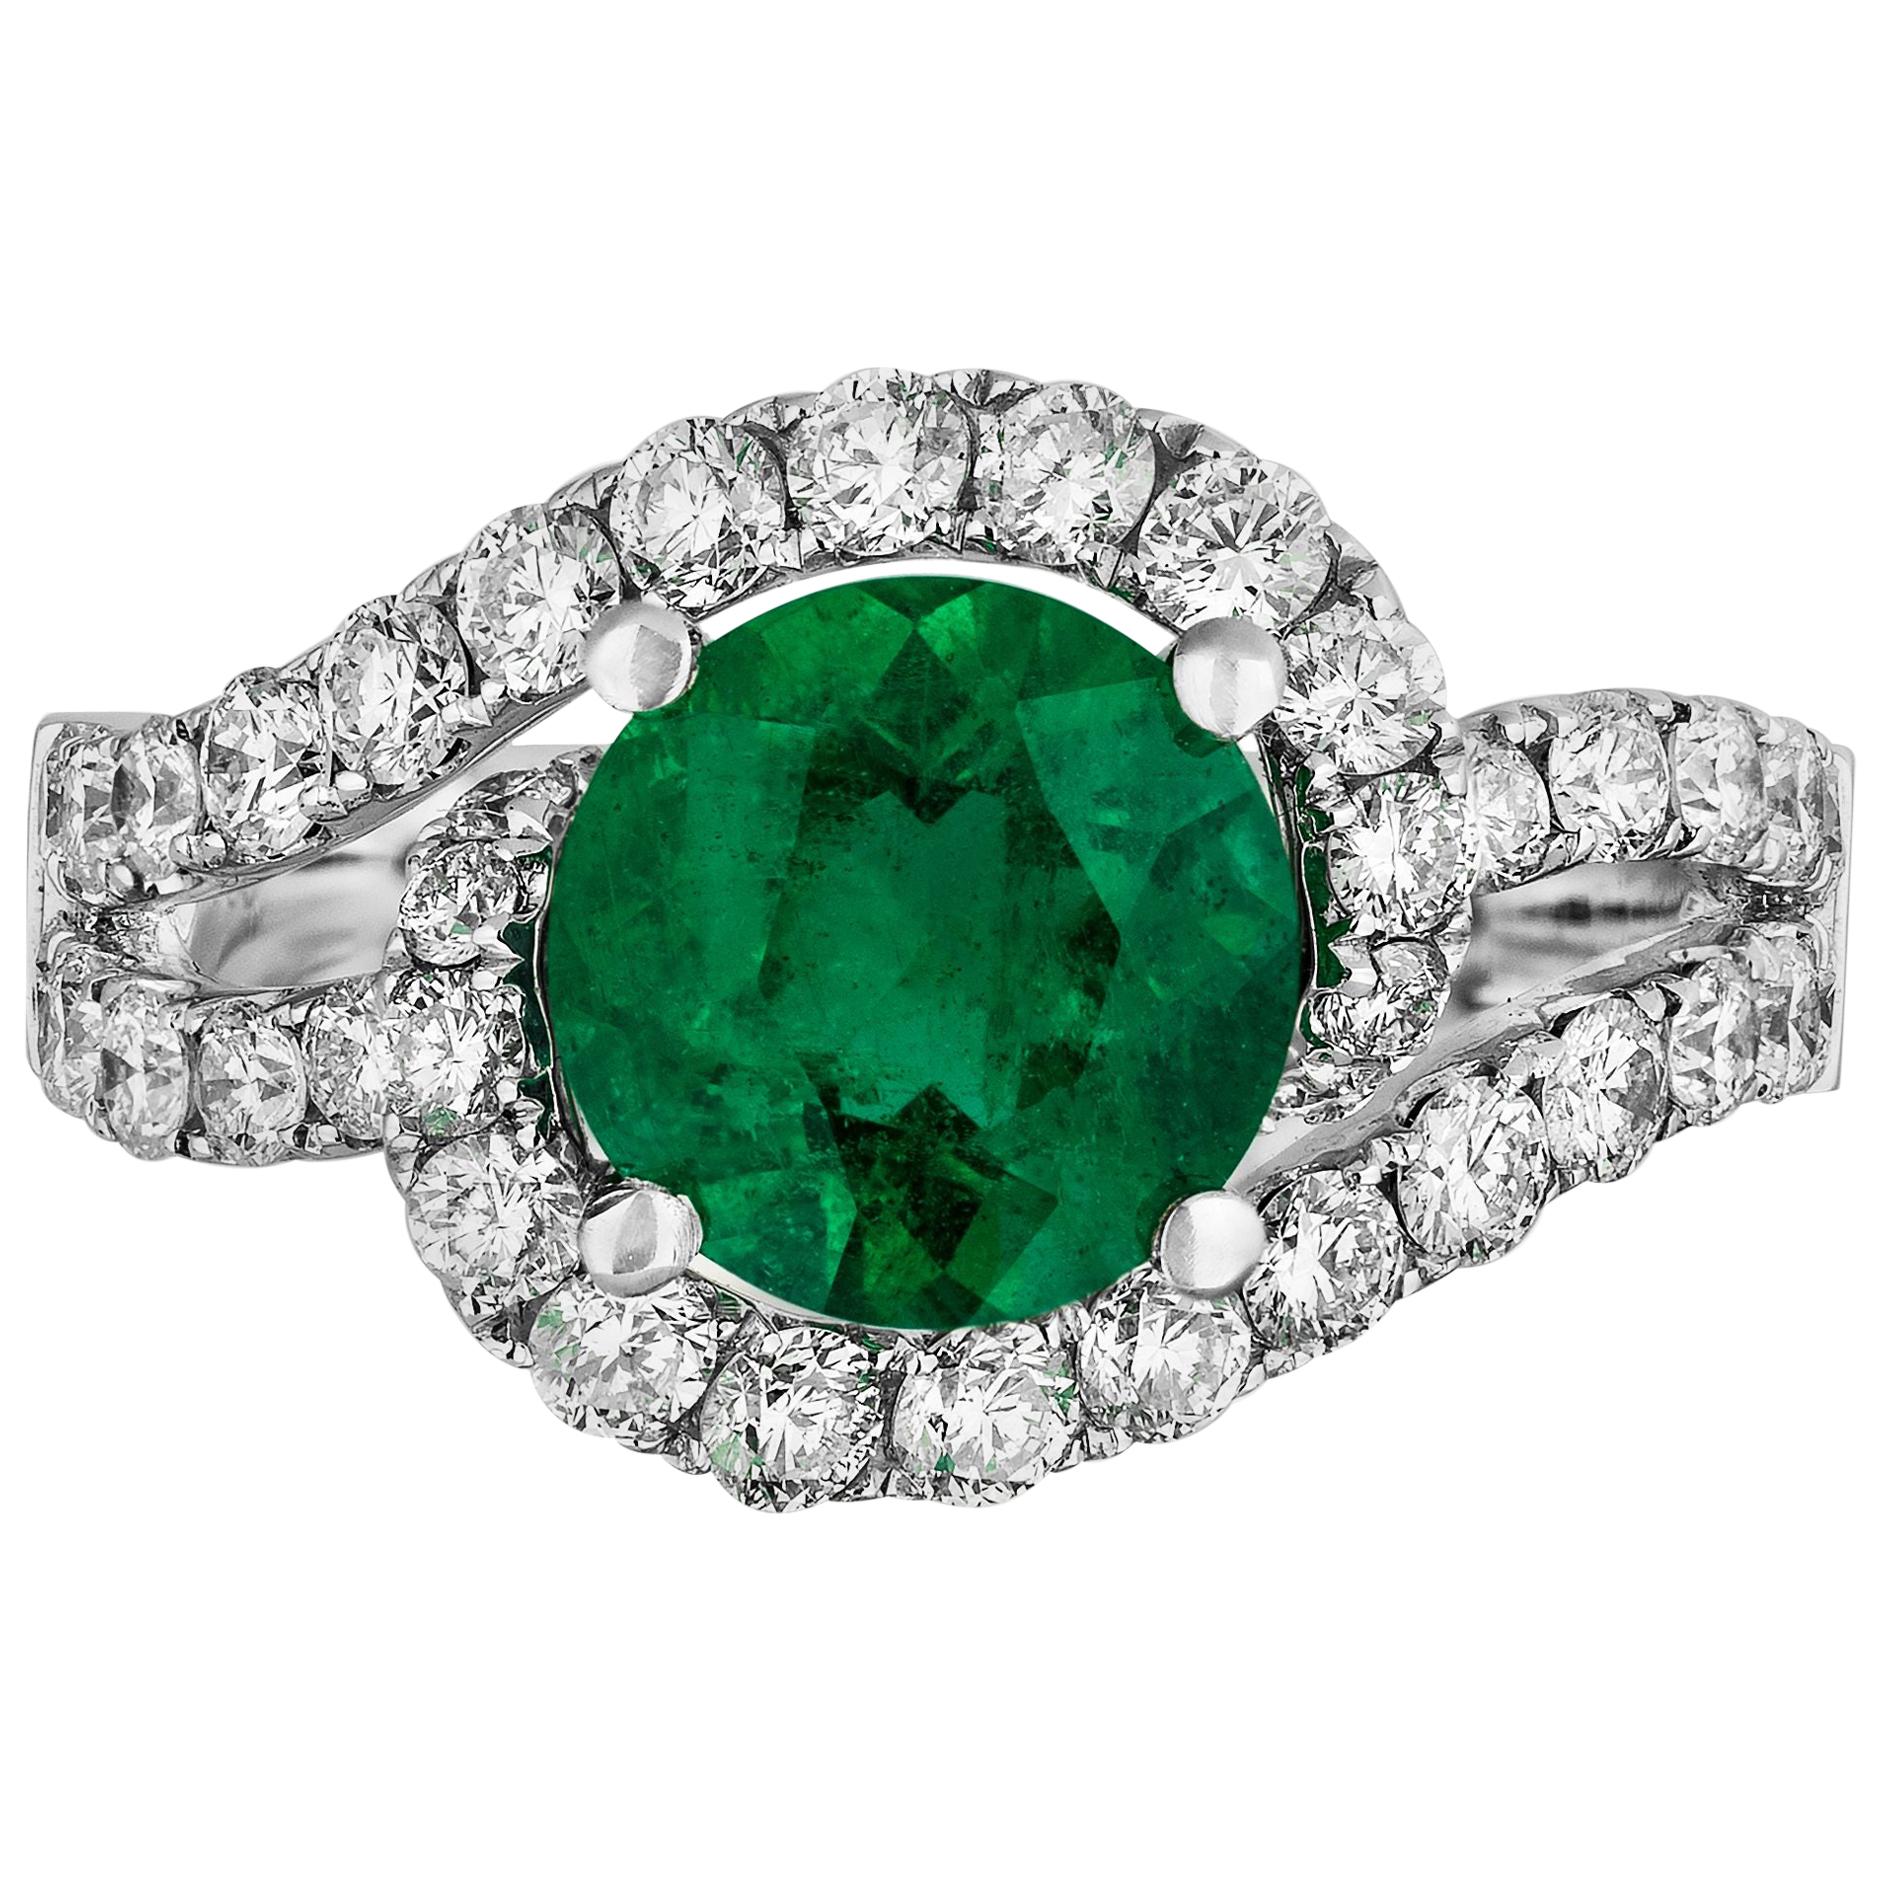 1.88 Carat Emerald Diamond Cocktail Ring